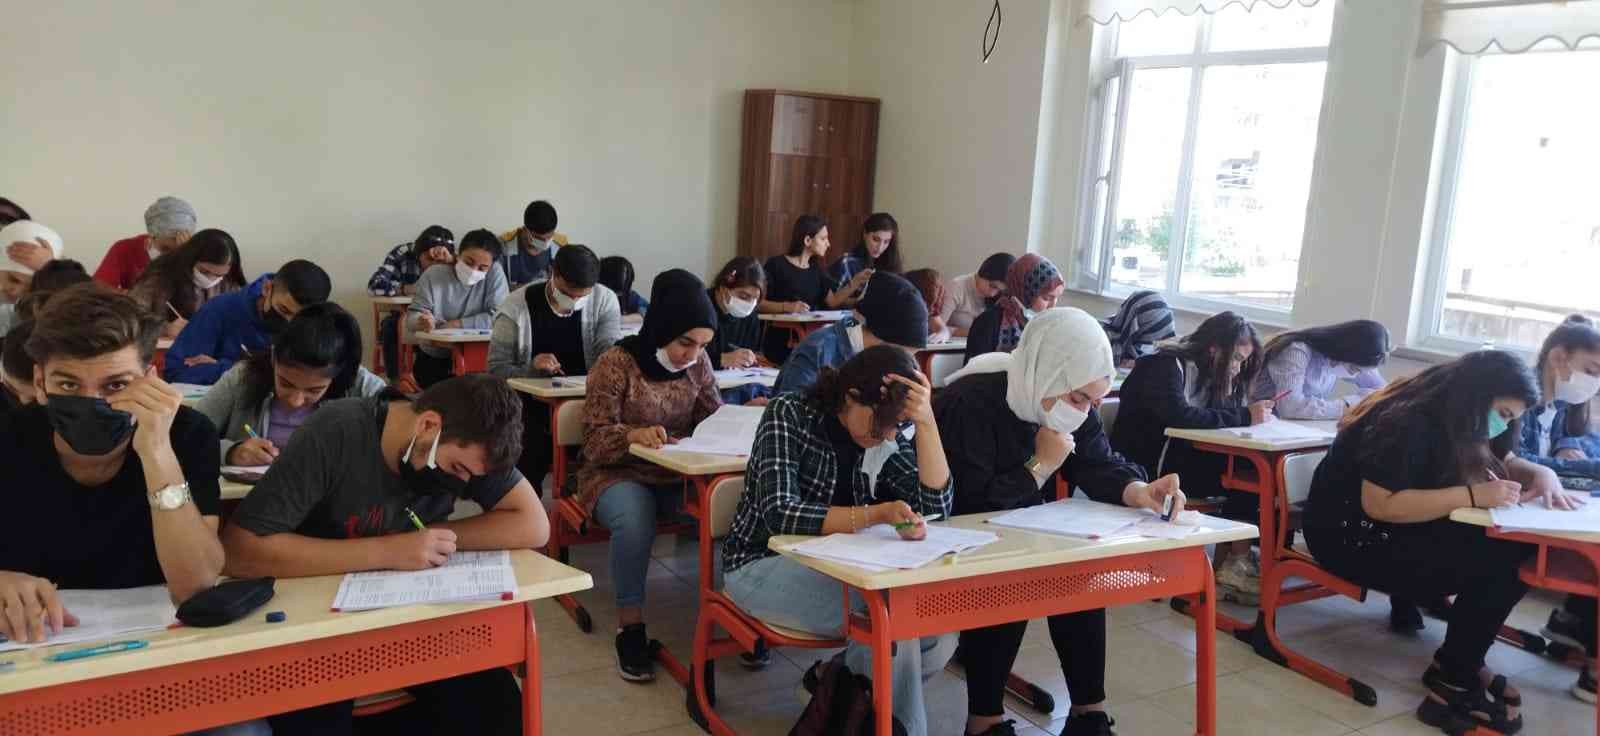 Teknik imkanlarla donatılan kütüphaneyi 28 ayda 13 bin öğrenci ziyaret etti #diyarbakir